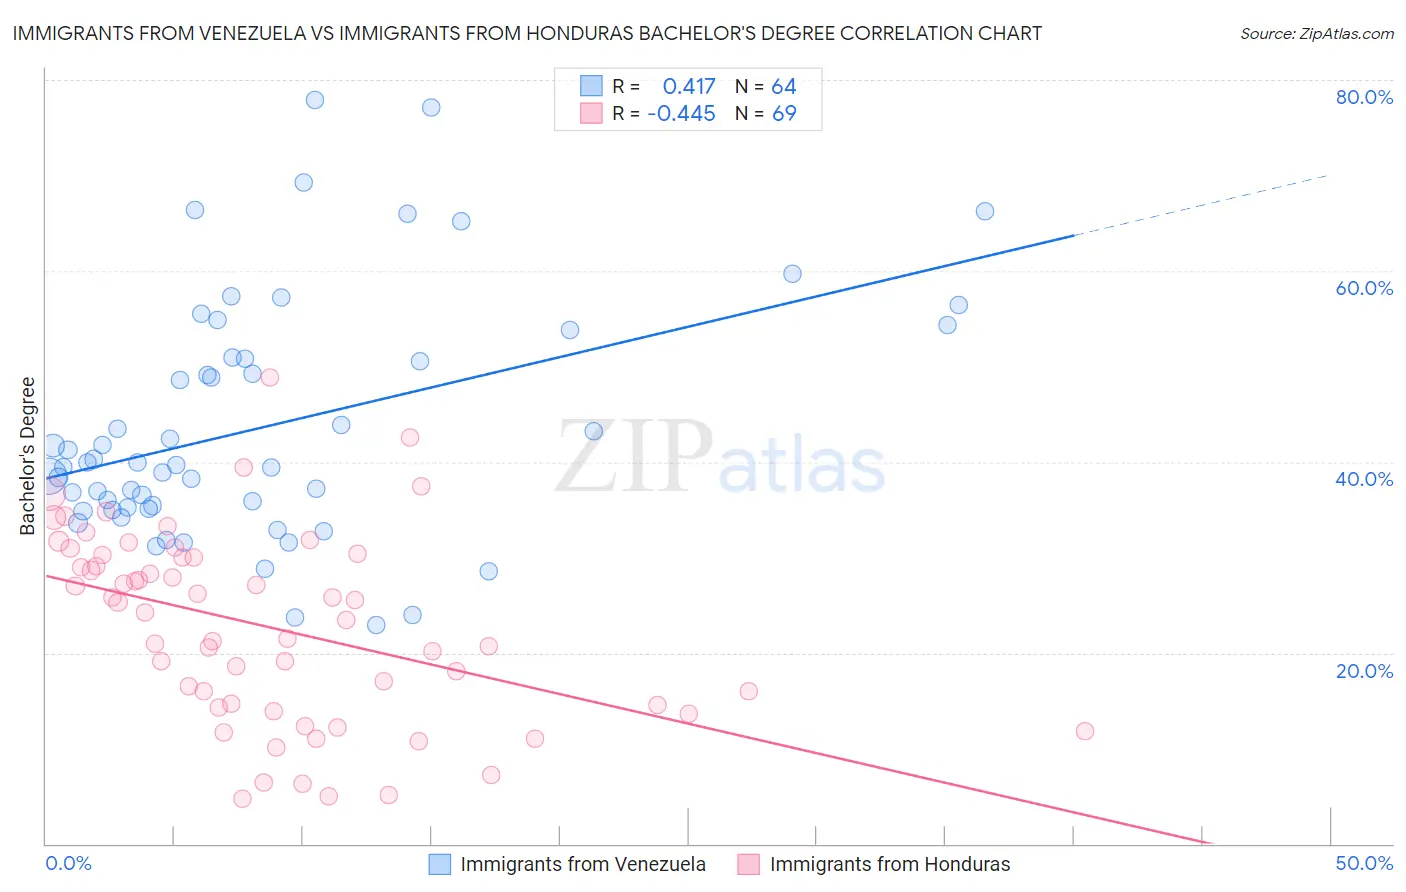 Immigrants from Venezuela vs Immigrants from Honduras Bachelor's Degree